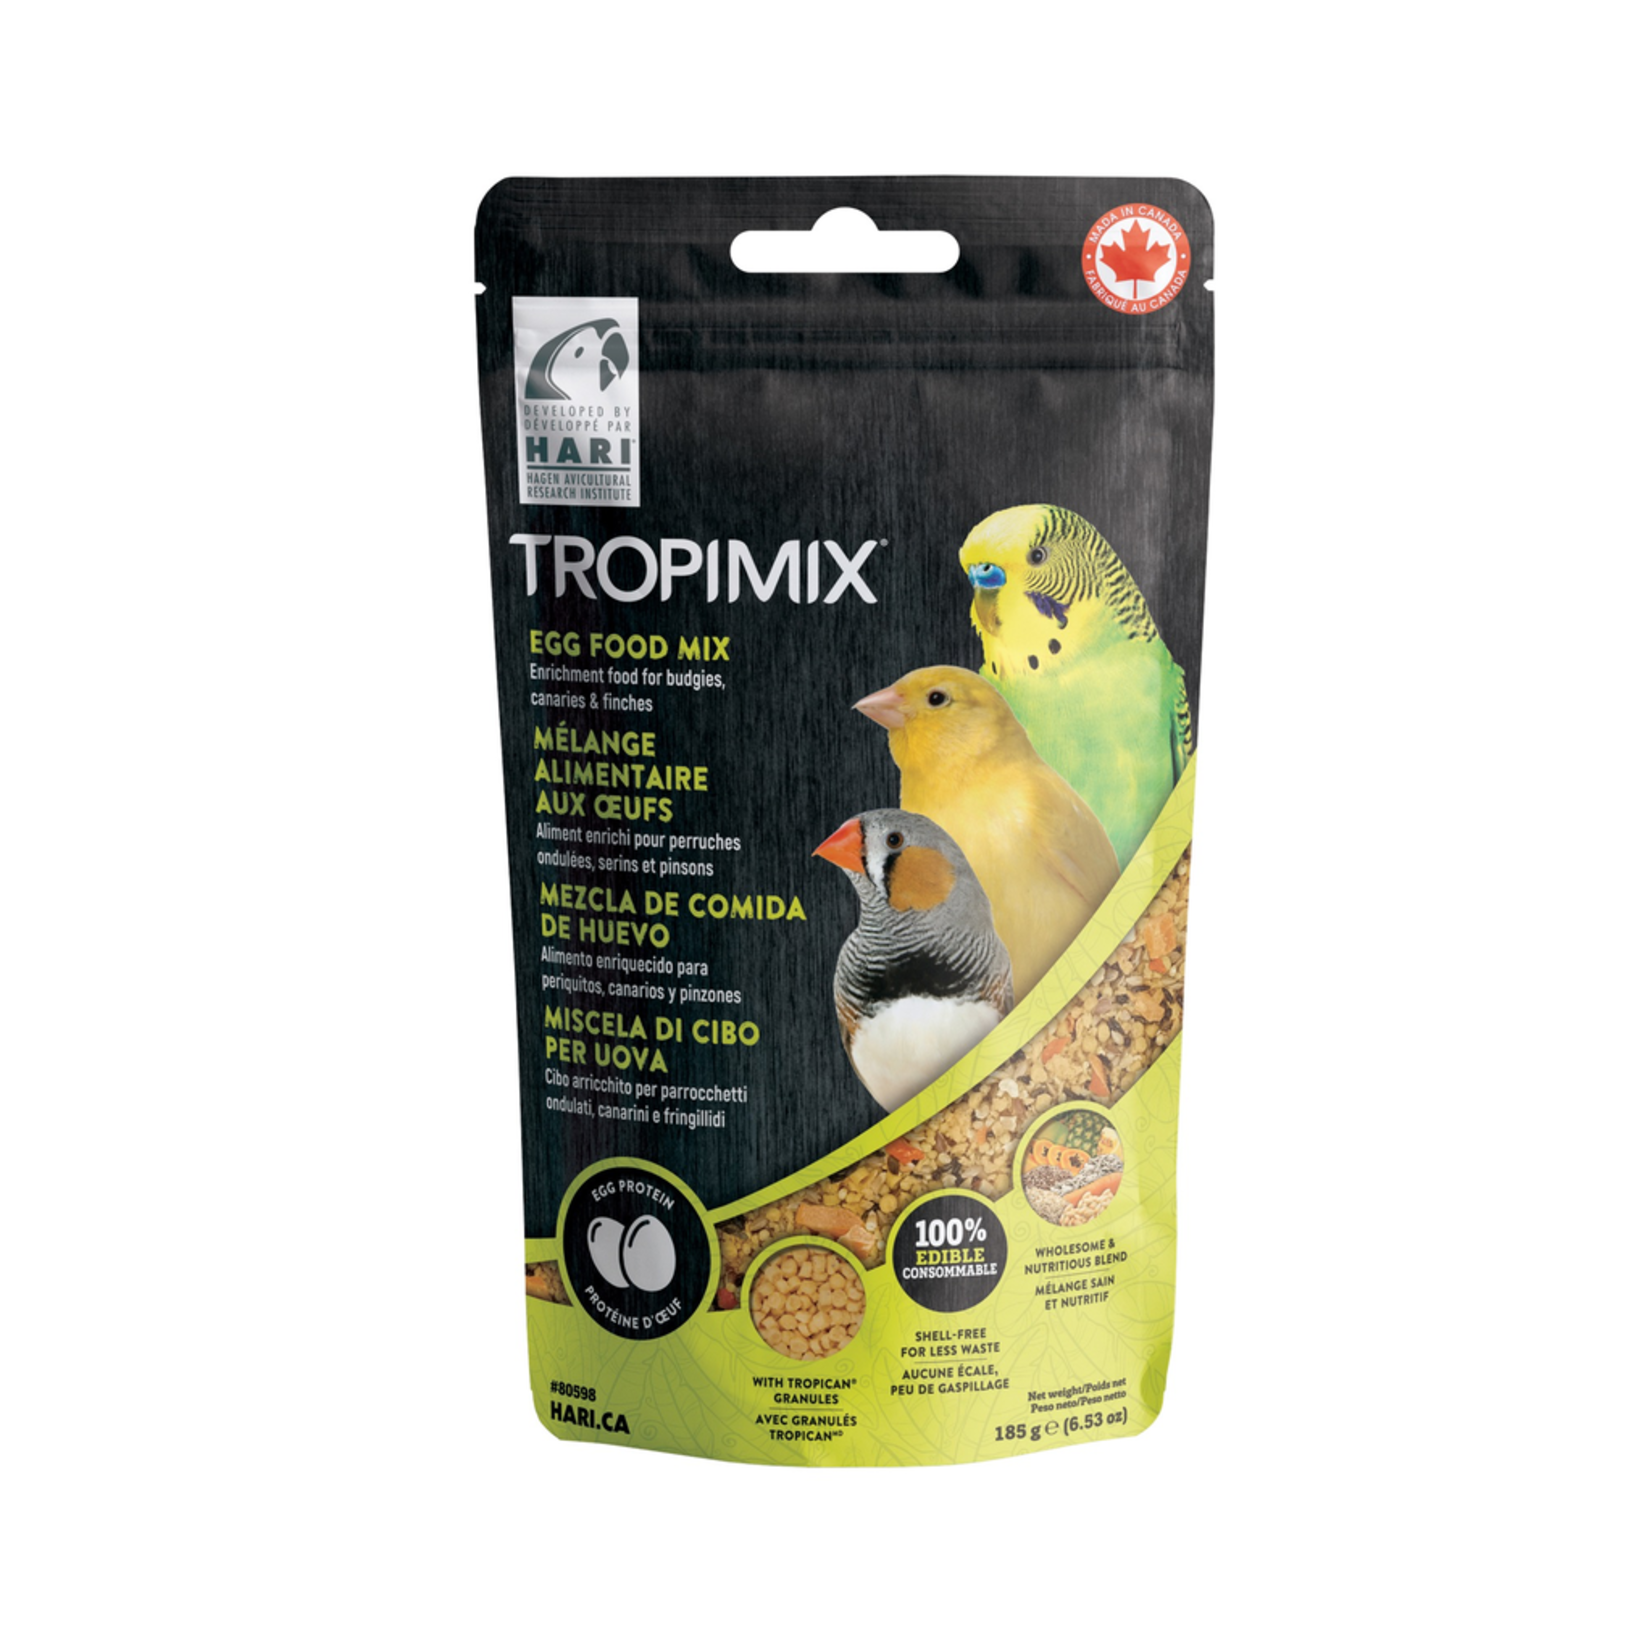 TROPICAN Tropimix Egg Food Mix Enrichment Food for Budgies, Canaries & Finches - 185 g (6.53 oz)